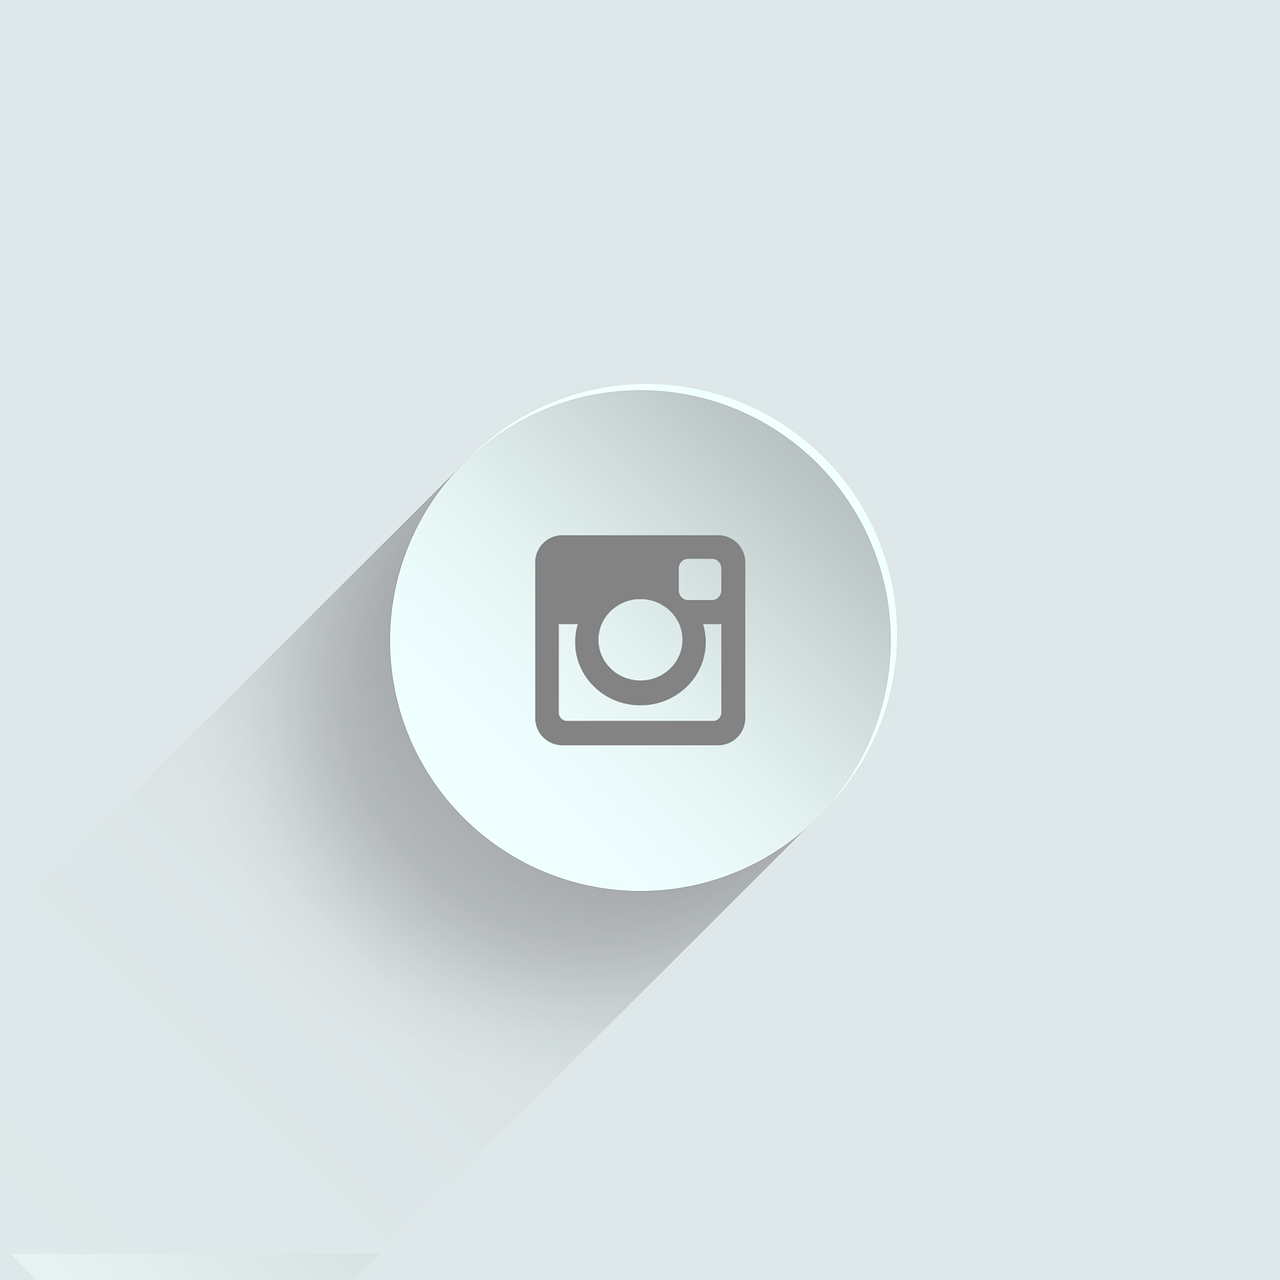 Illustrated Instagram button